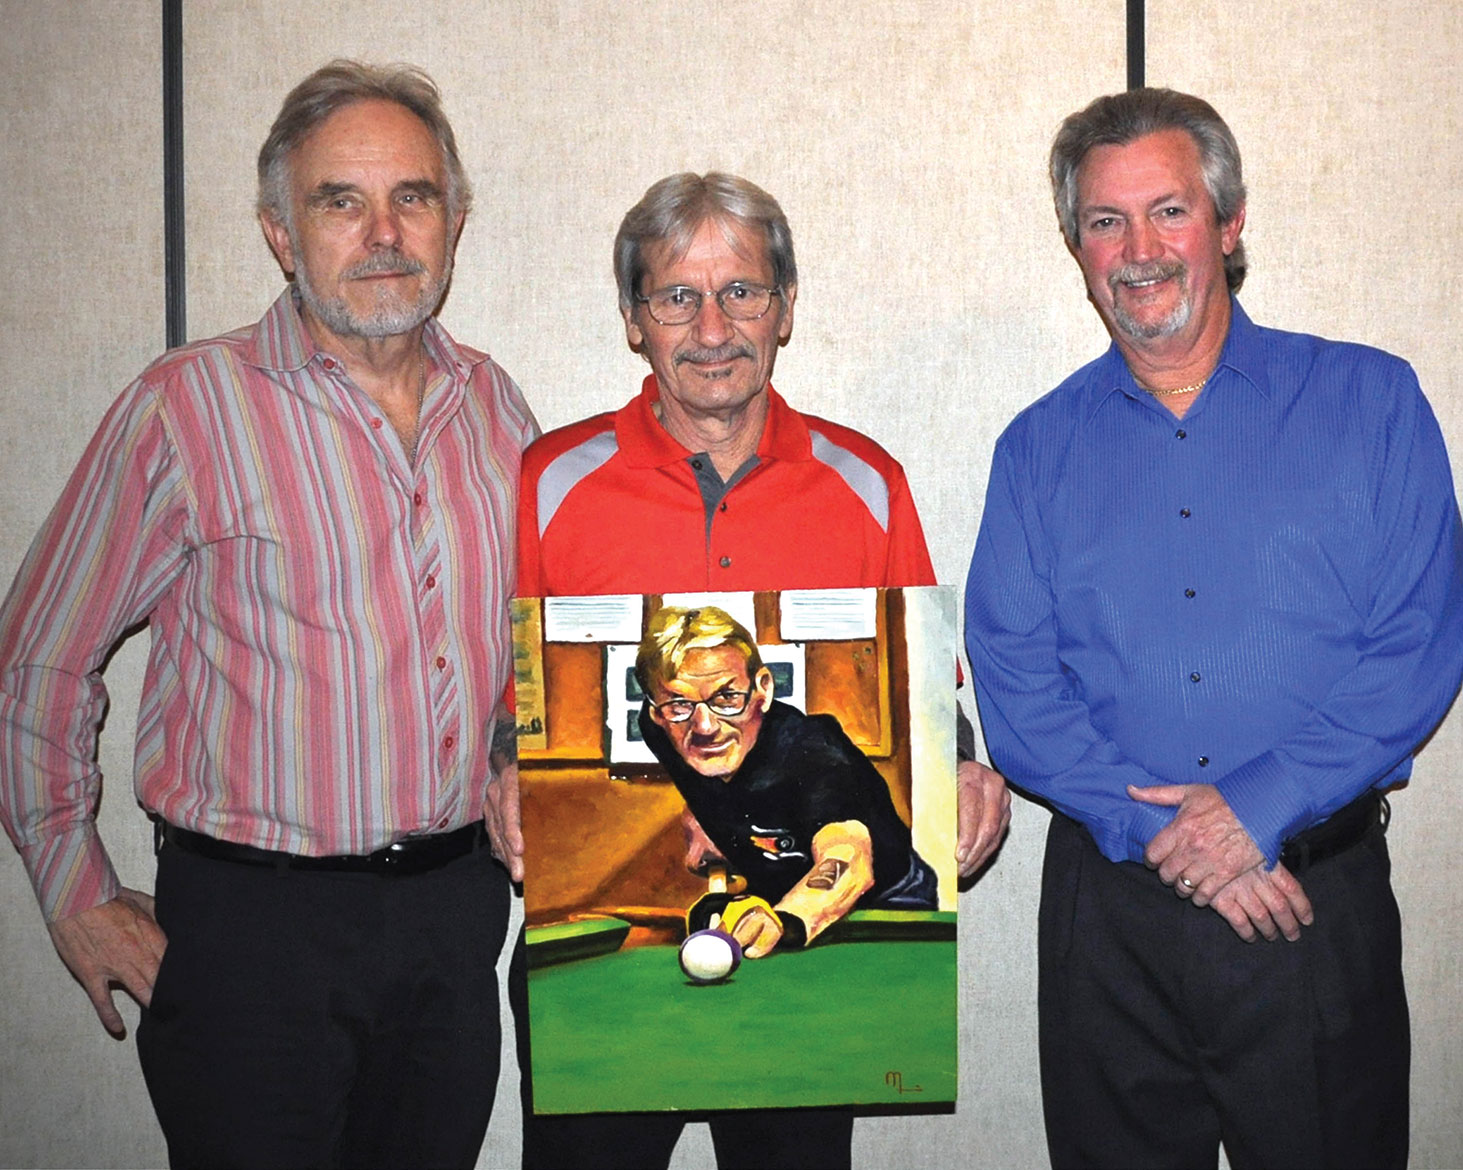 Left to right: Jim Morris (artist), Joe “Fast Eddie” Giammarino, Dominic “The Doctor” Borland